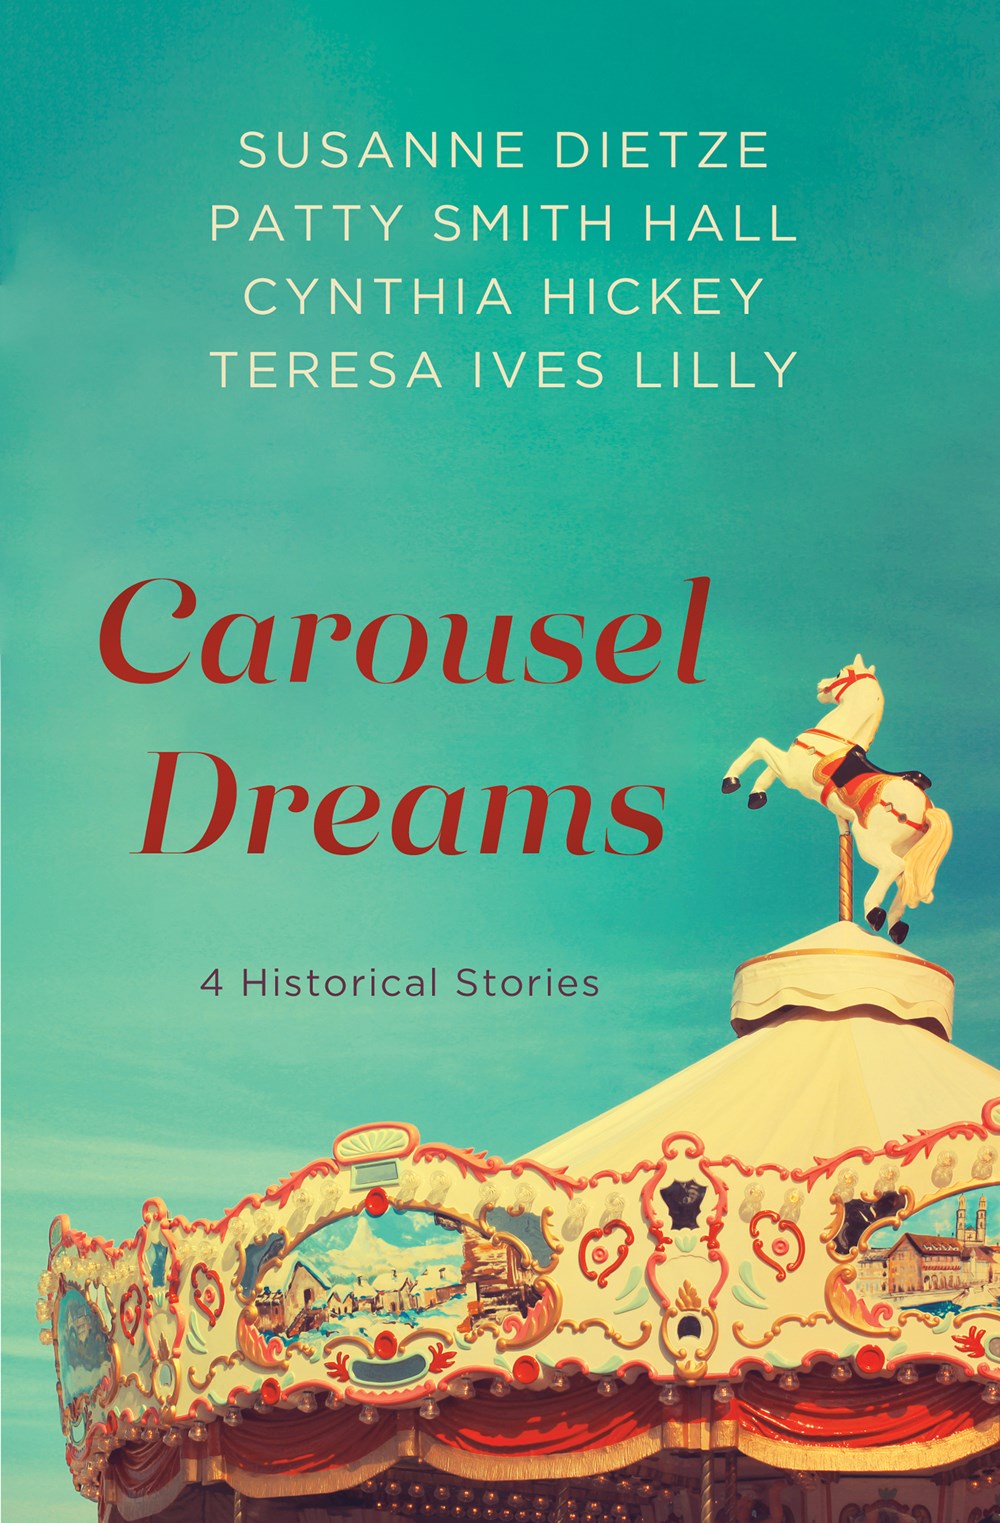 Carousel Dreams - The Christian Gift Company